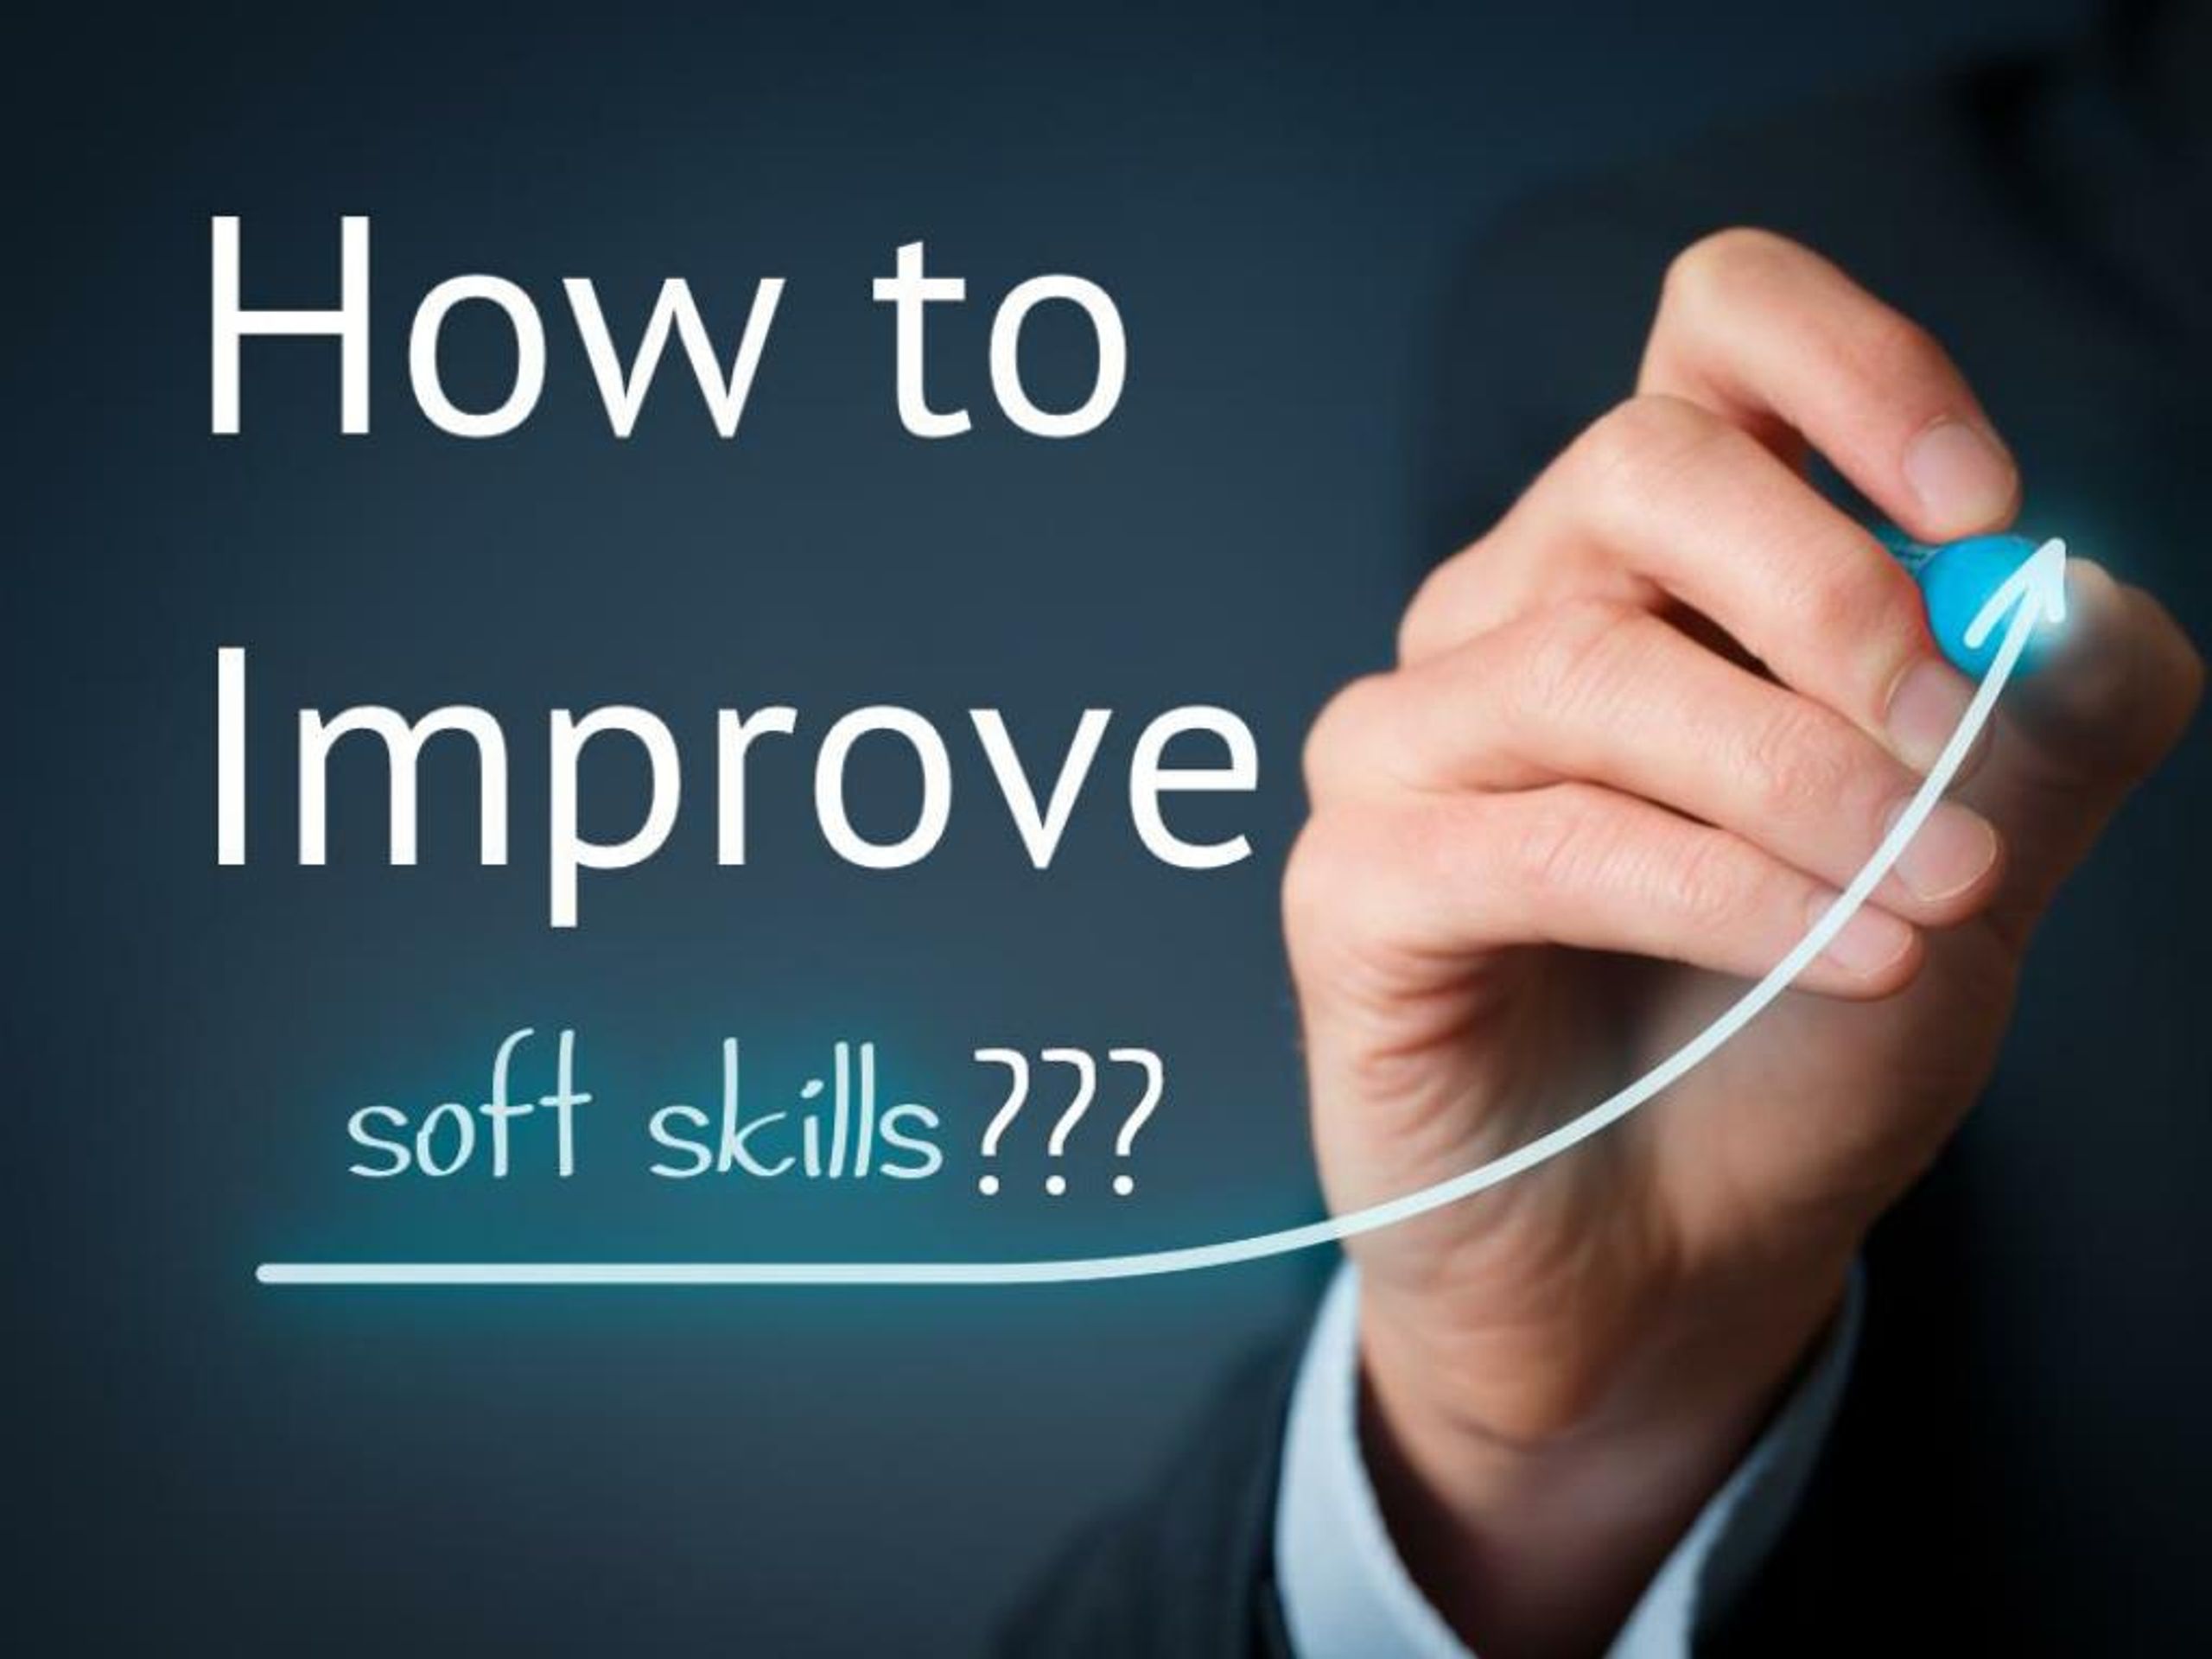 soft skills ppt presentation free download